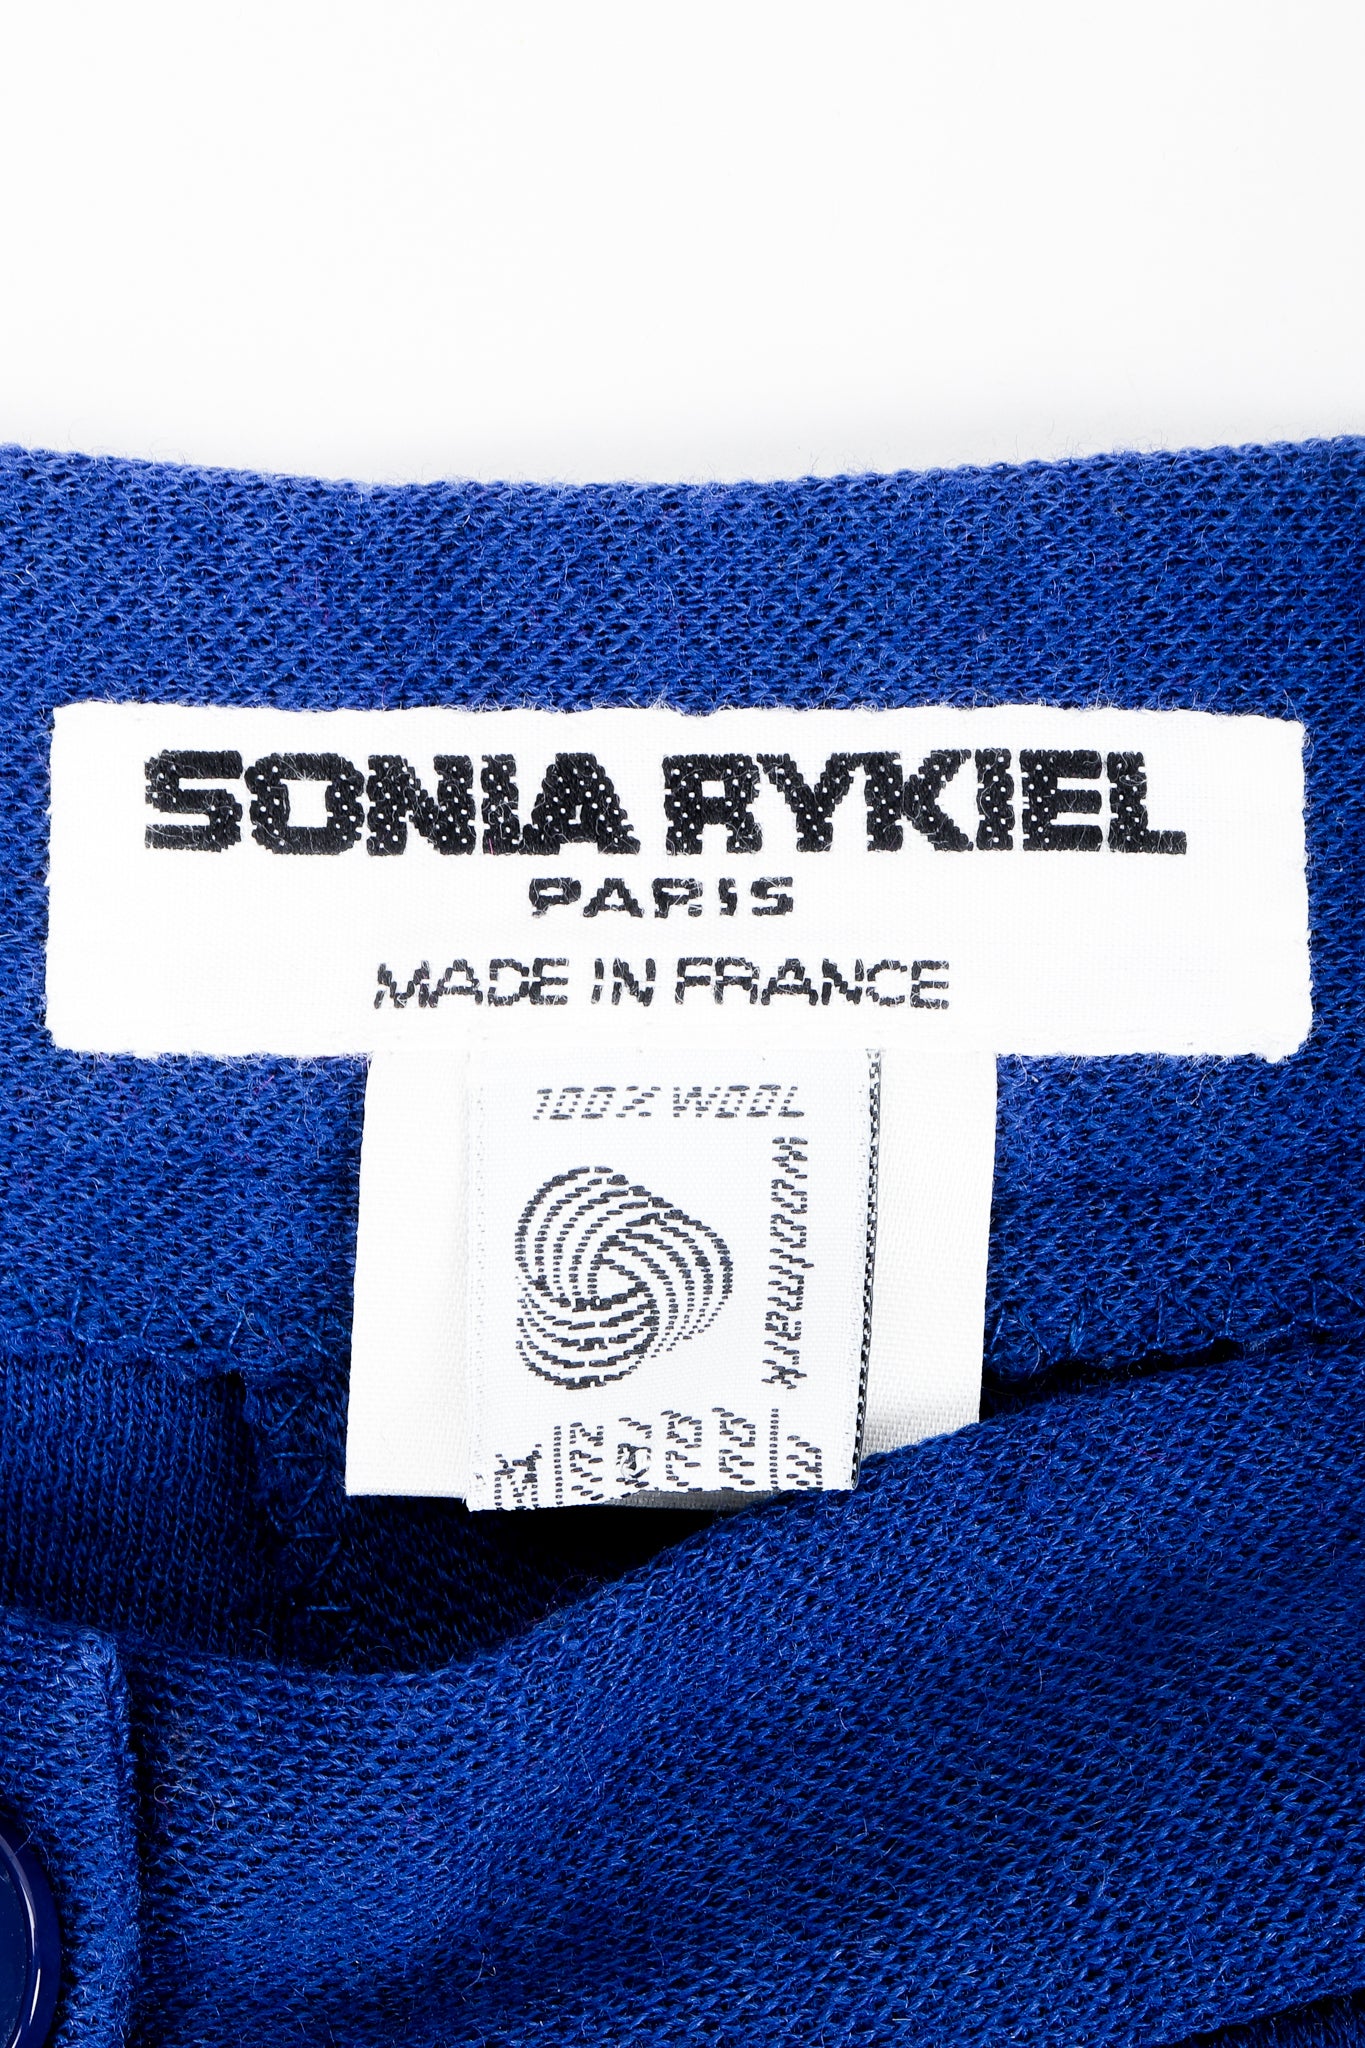 Vintage Sonia Rykiel Label on Blue fabric